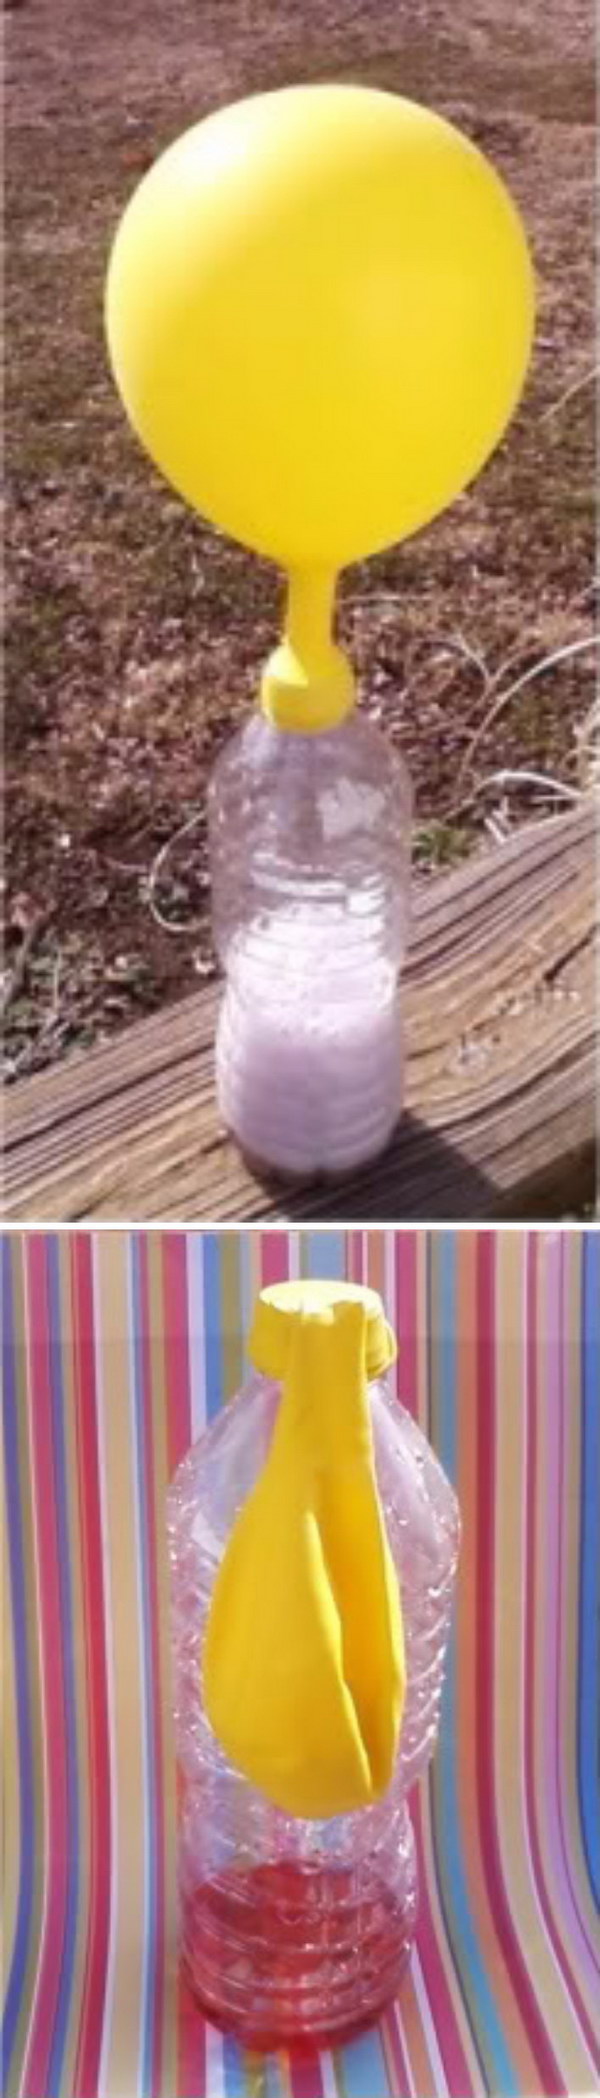 Magic Balloon Science Experiment Using Baking Soda and Vinegar. 